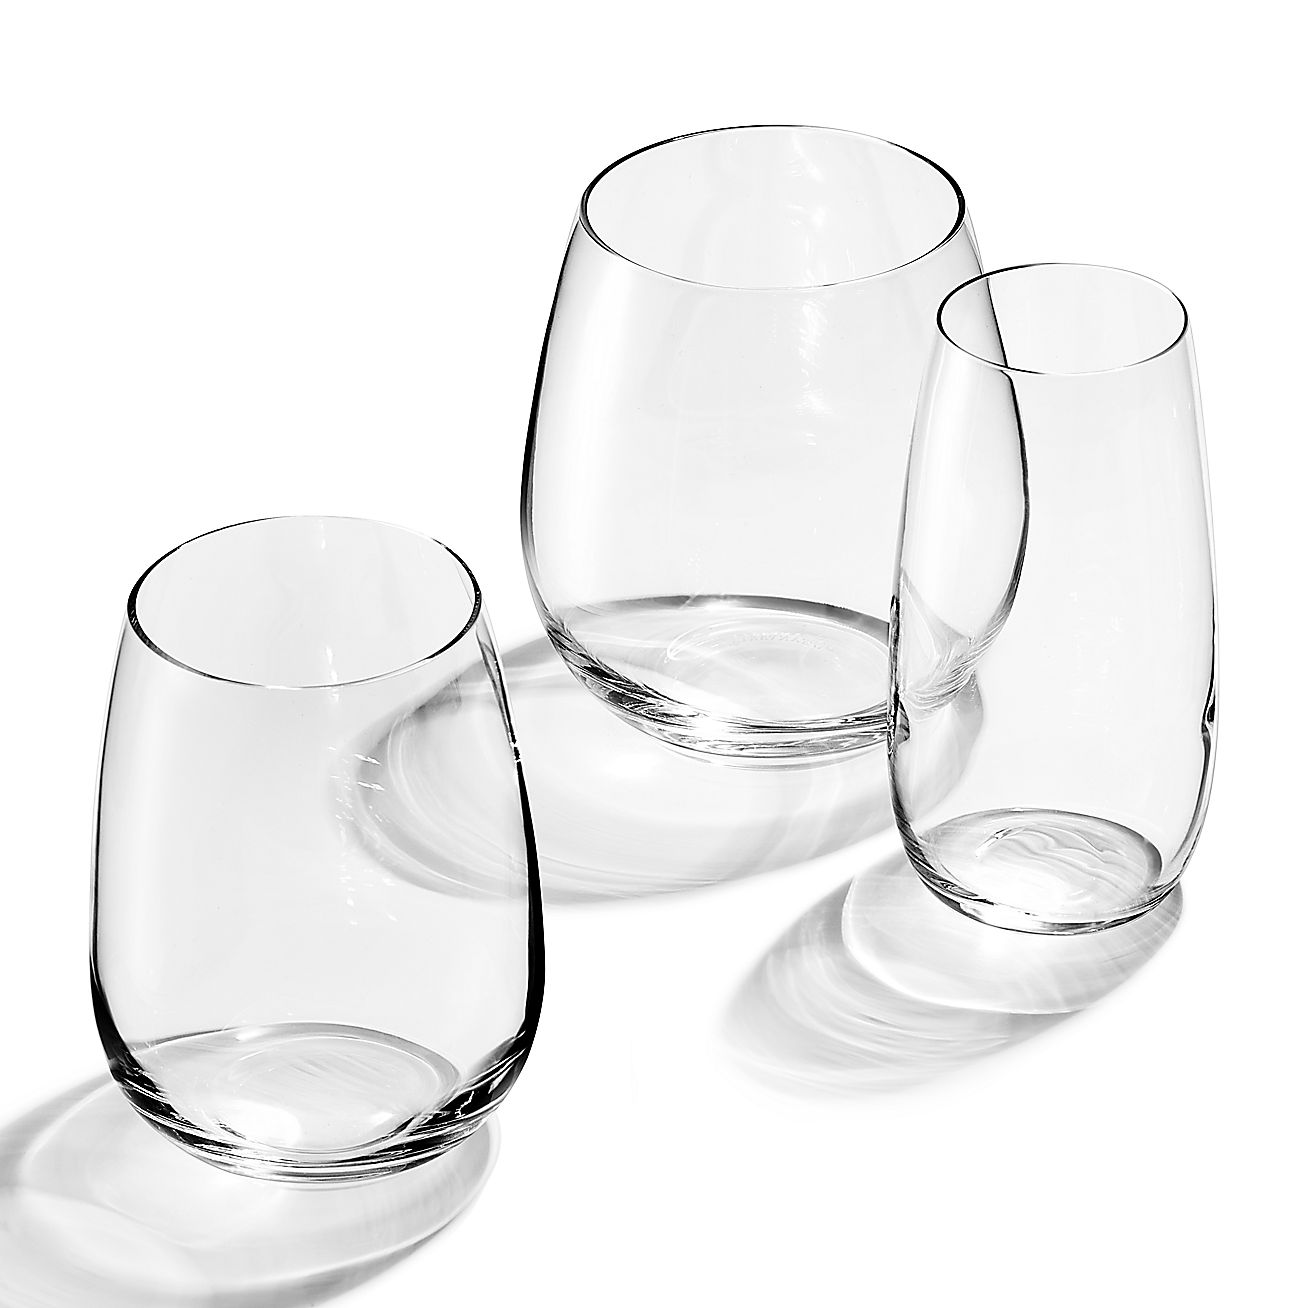 https://media.tiffany.com/is/image/Tiffany/EcomItemL2/tiffany-home-essentialsstemless-red-wine-glasses-72333128_1048383_AV_2.jpg?&op_usm=2.0,1.0,6.0&defaultImage=NoImageAvailableInternal&